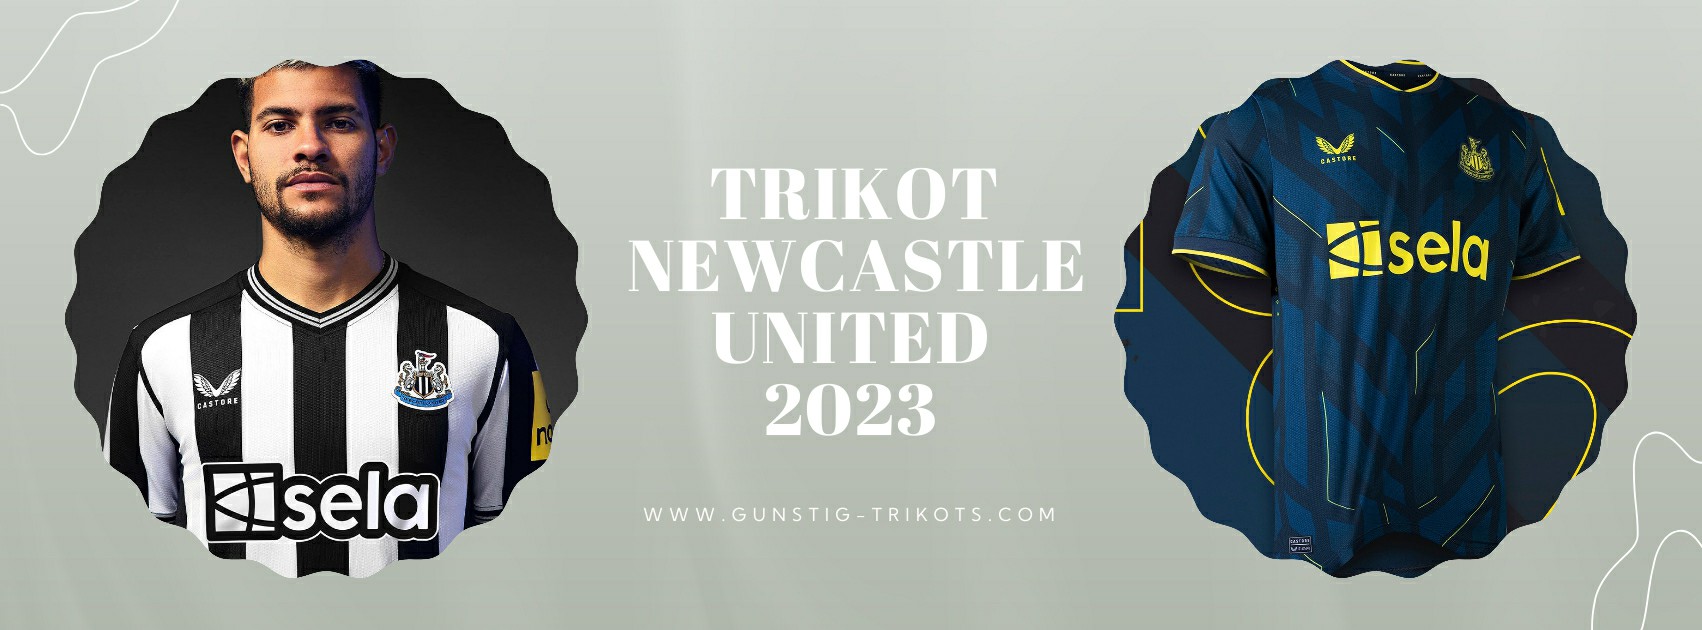 Newcastle United Trikot 2023-2024